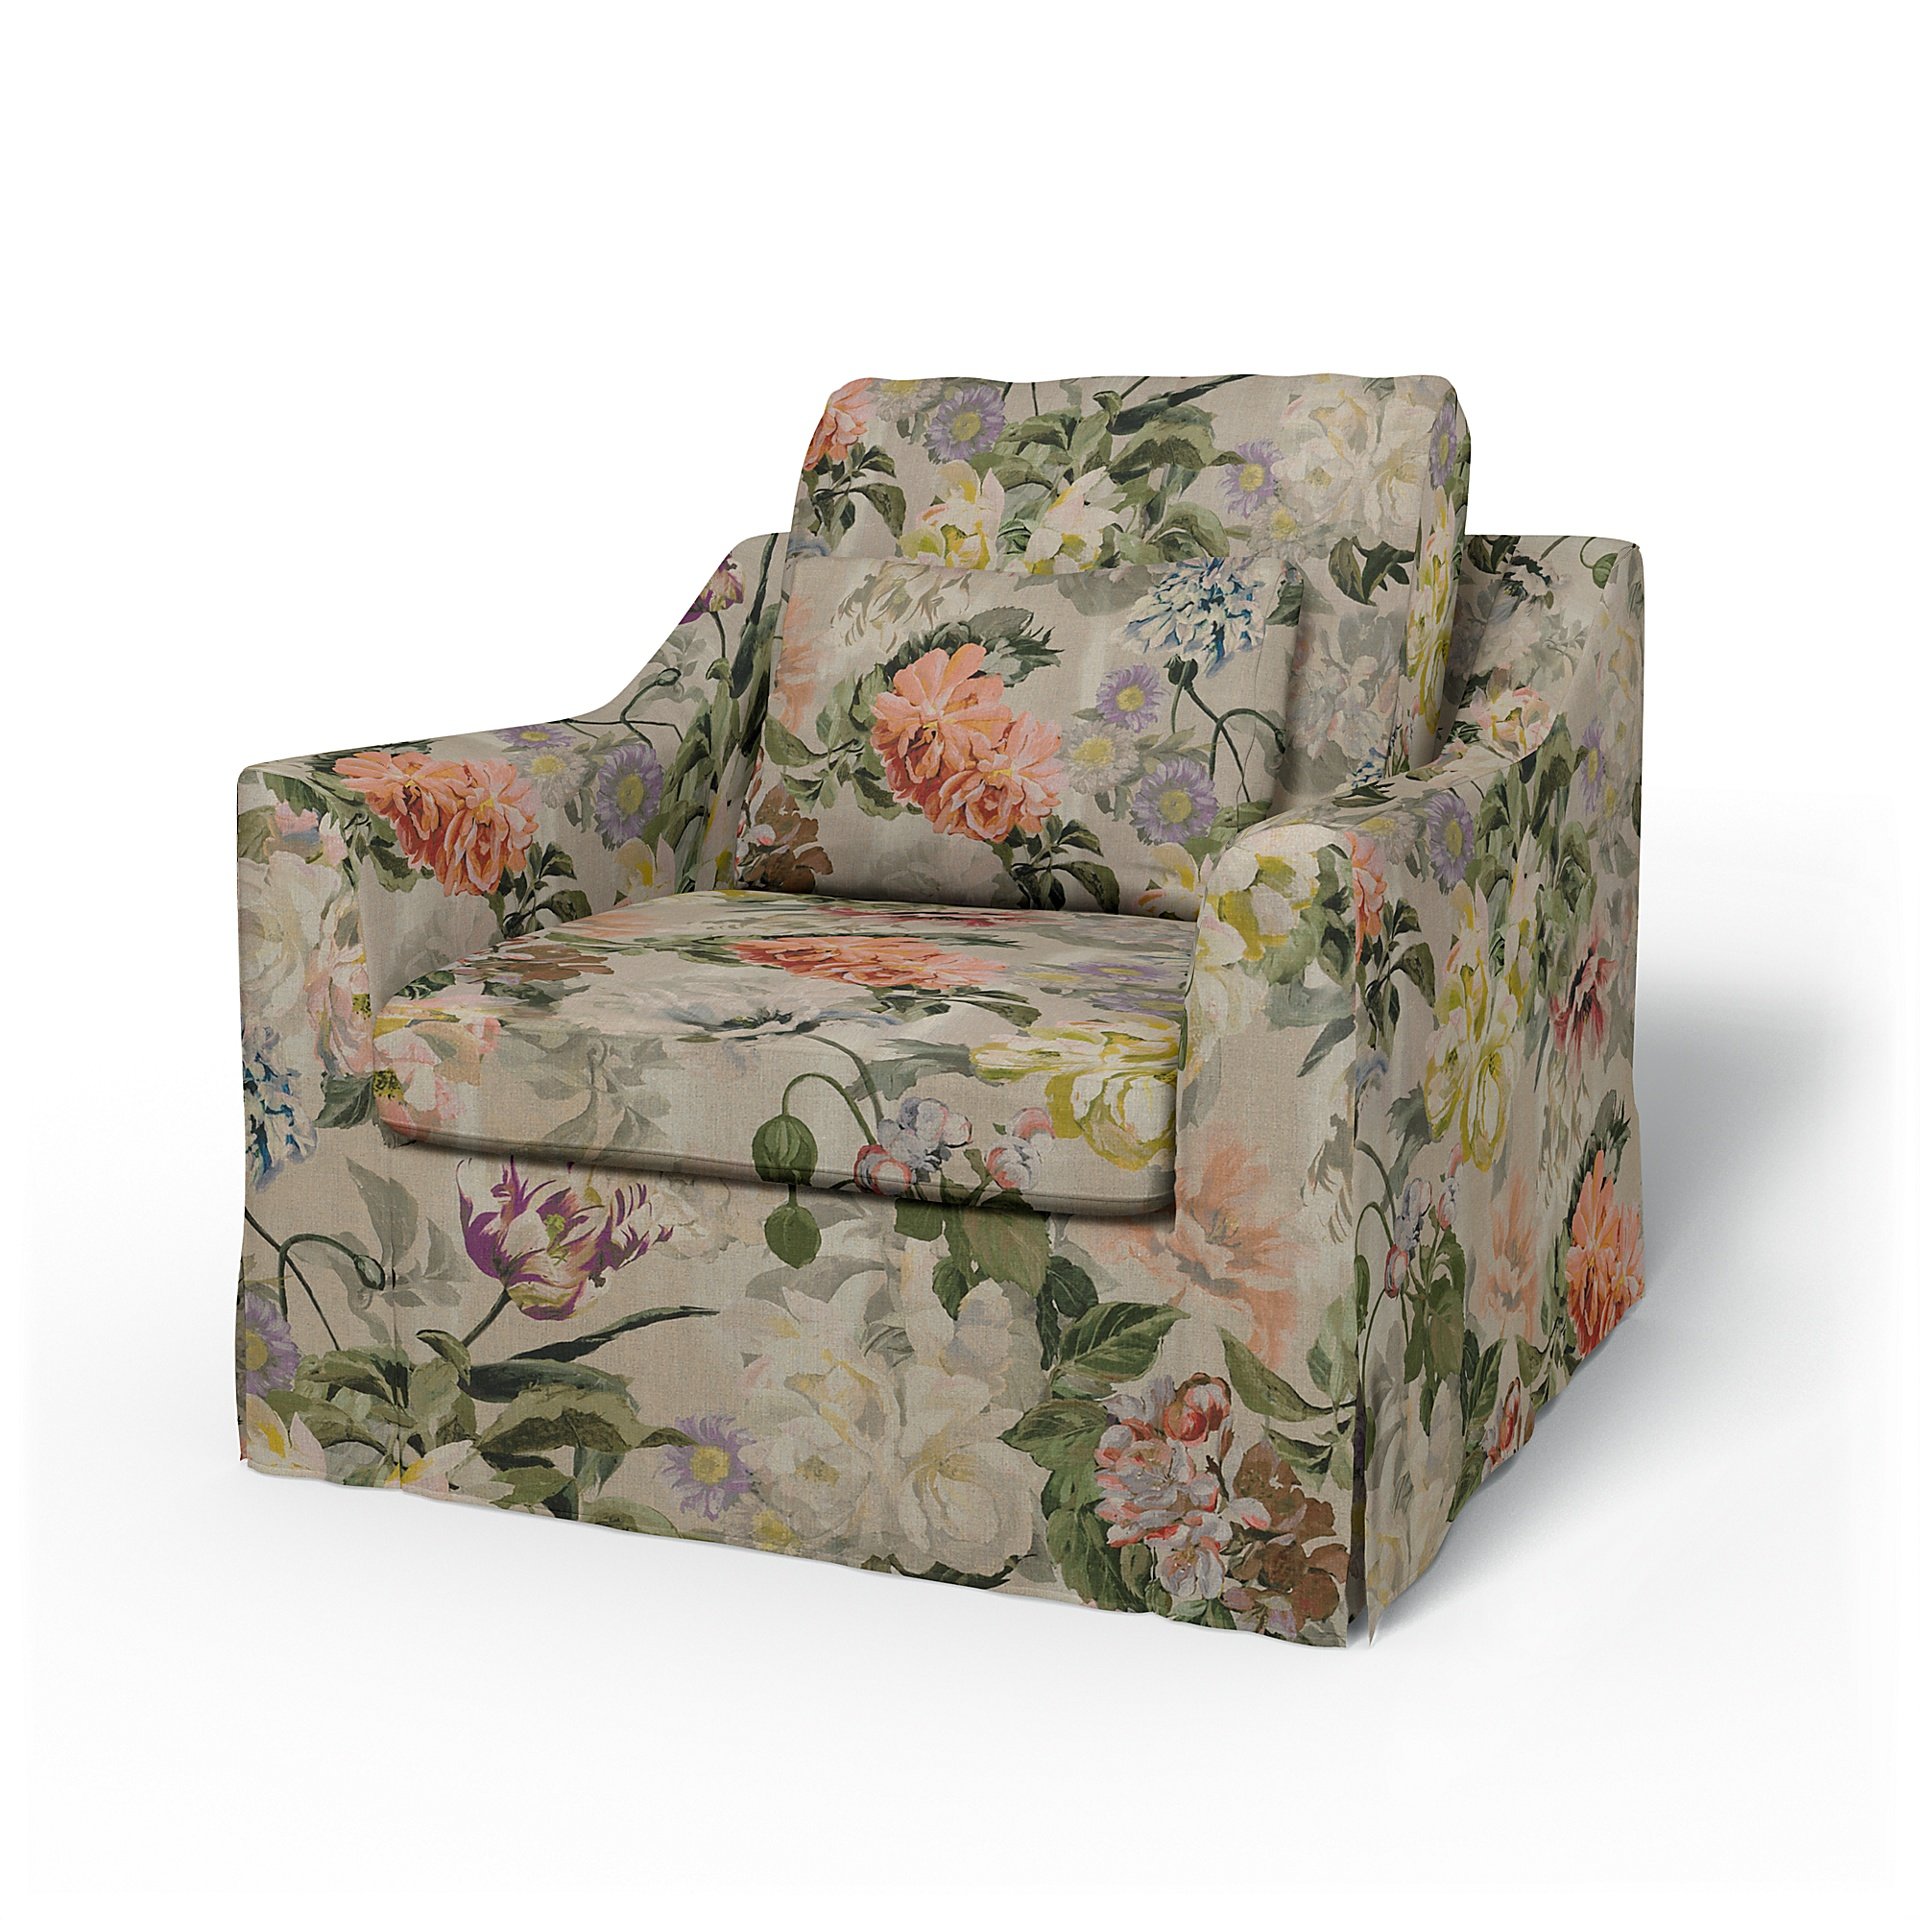 IKEA - Farlov Armchair Cover, Delft Flower - Tuberose, Linen - Bemz